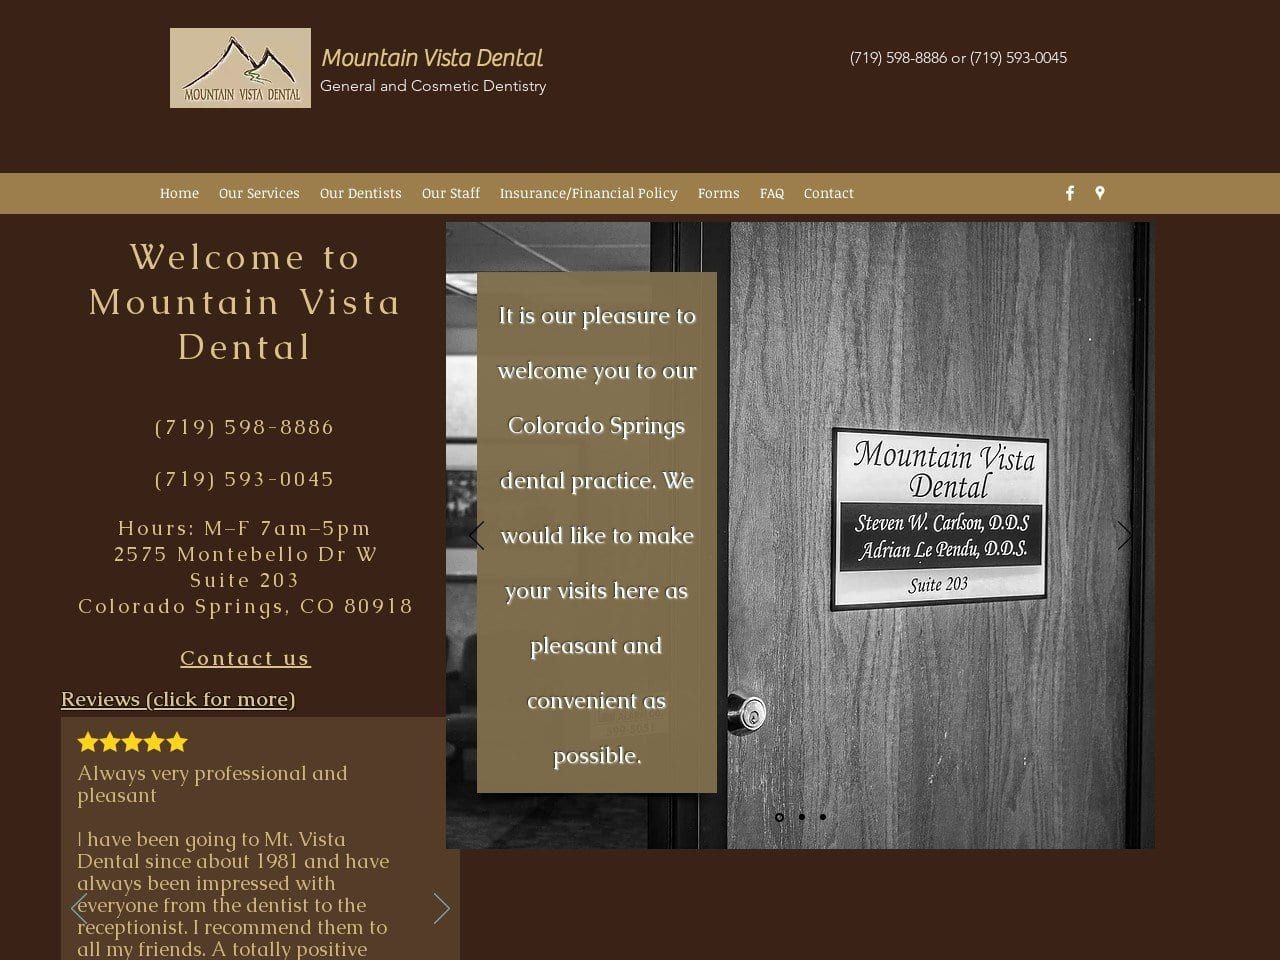 Mountain Vista Dental Website Screenshot from mtn-vista-dental.com